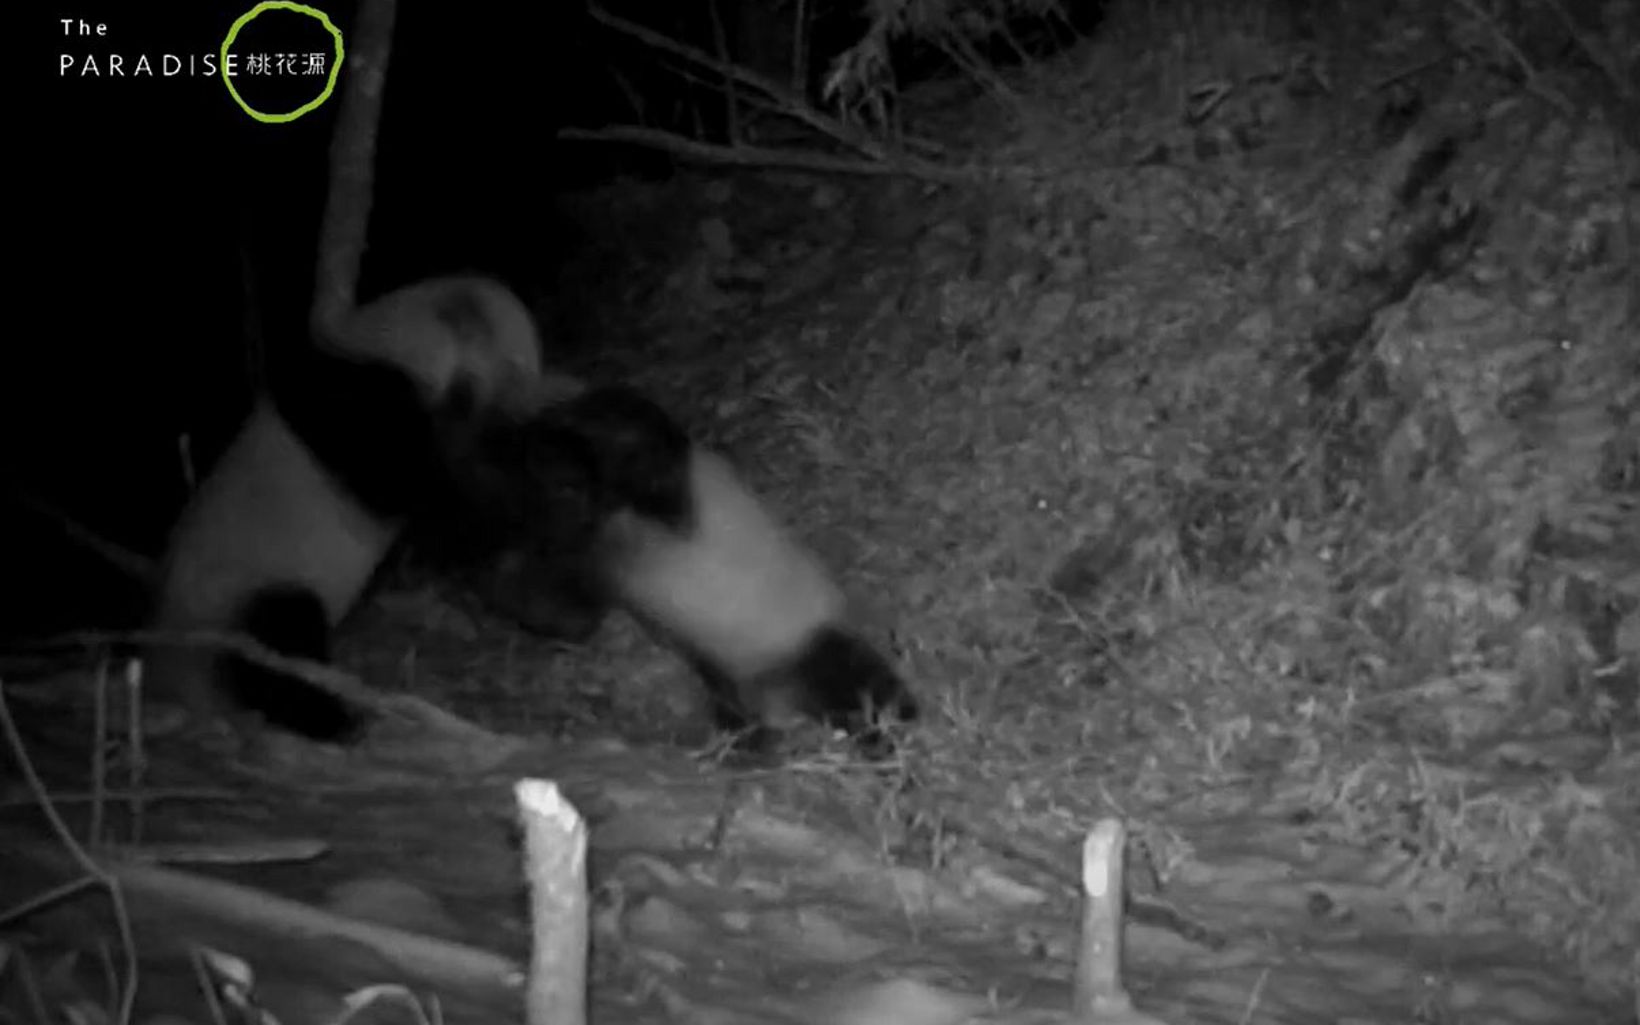 Two pandas fighting in the dark.